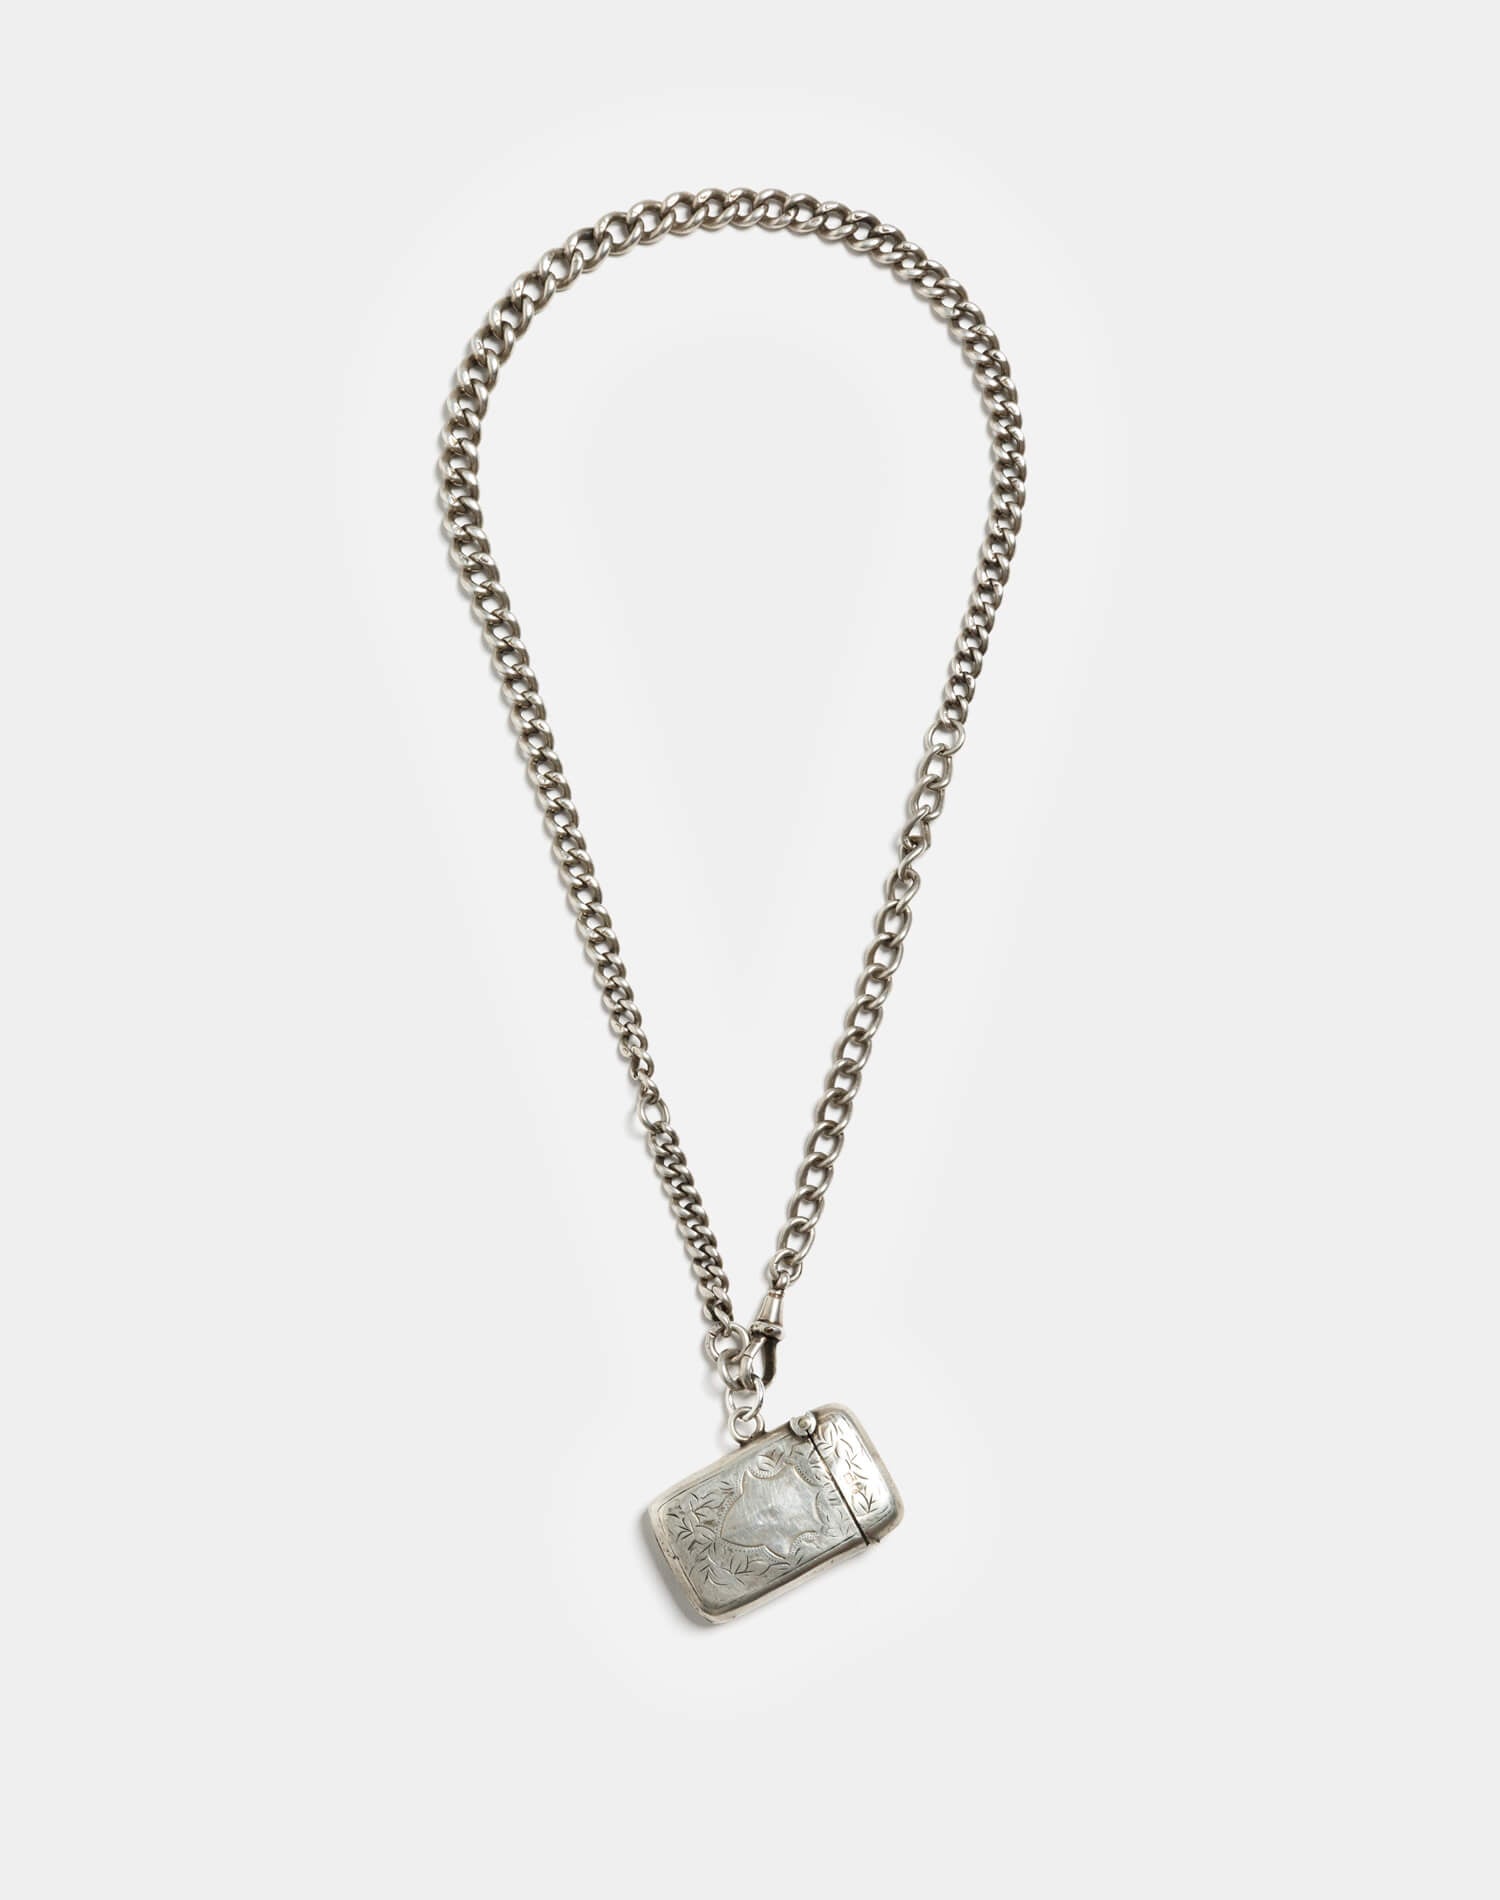 1900s Sterling Victorian Engraveable Match Safe Necklace